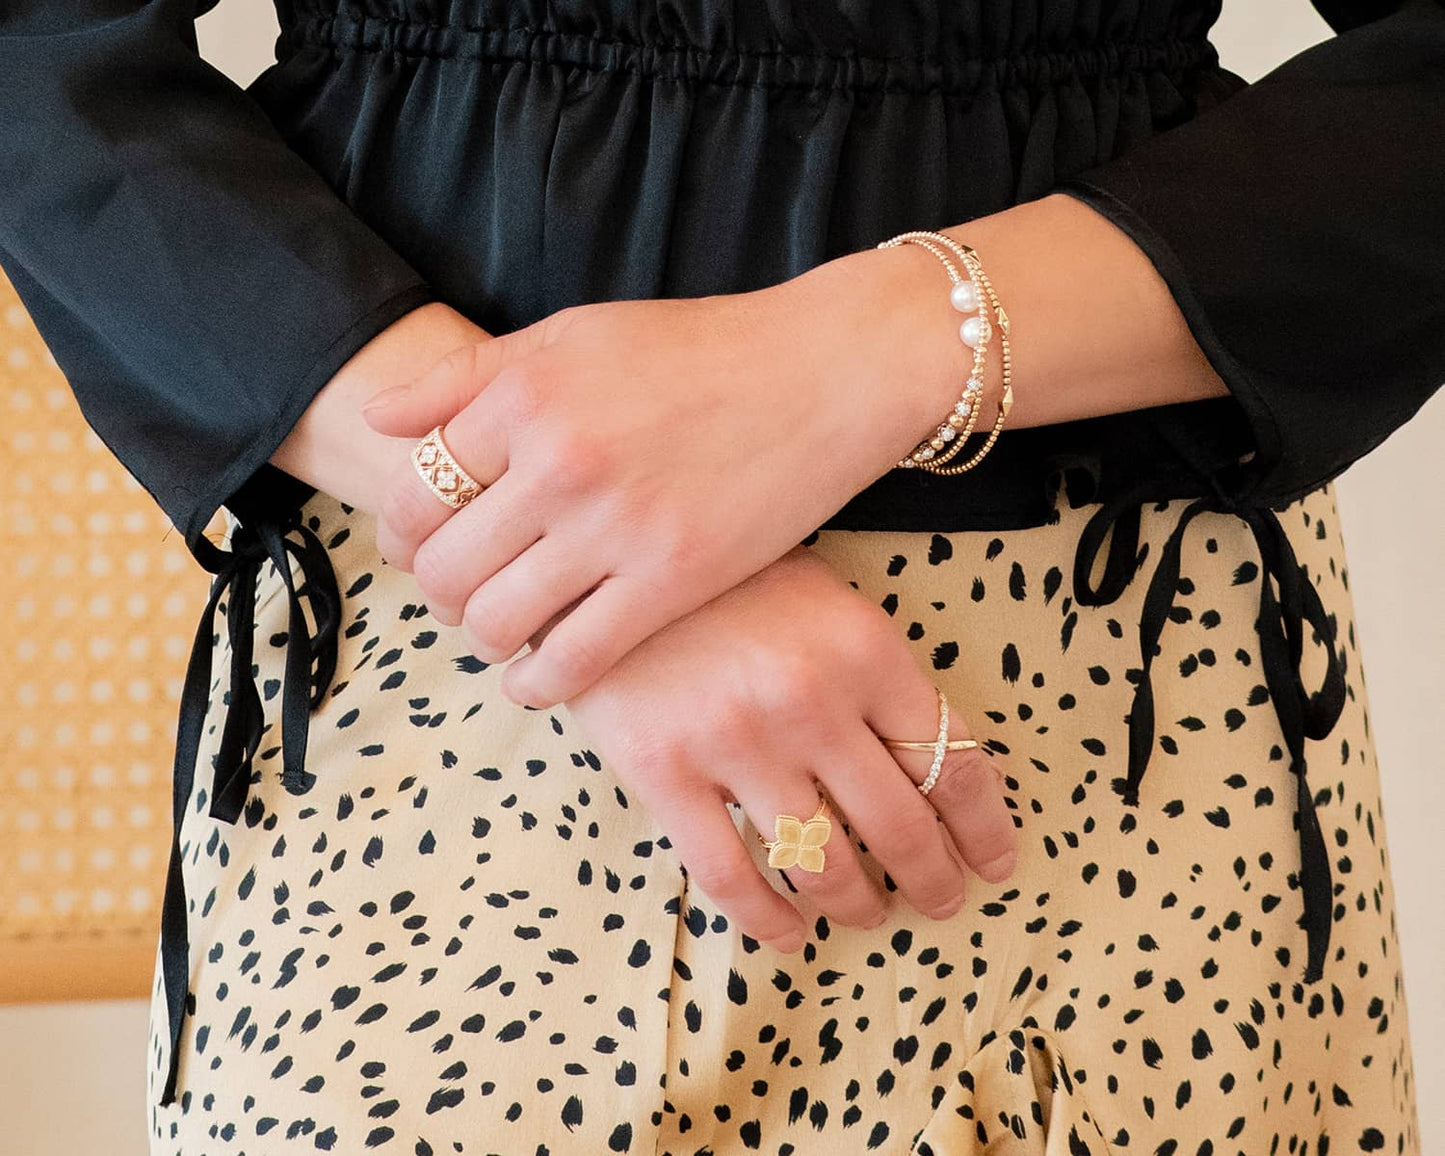 woman wearing multiple diamond rings and bracelets